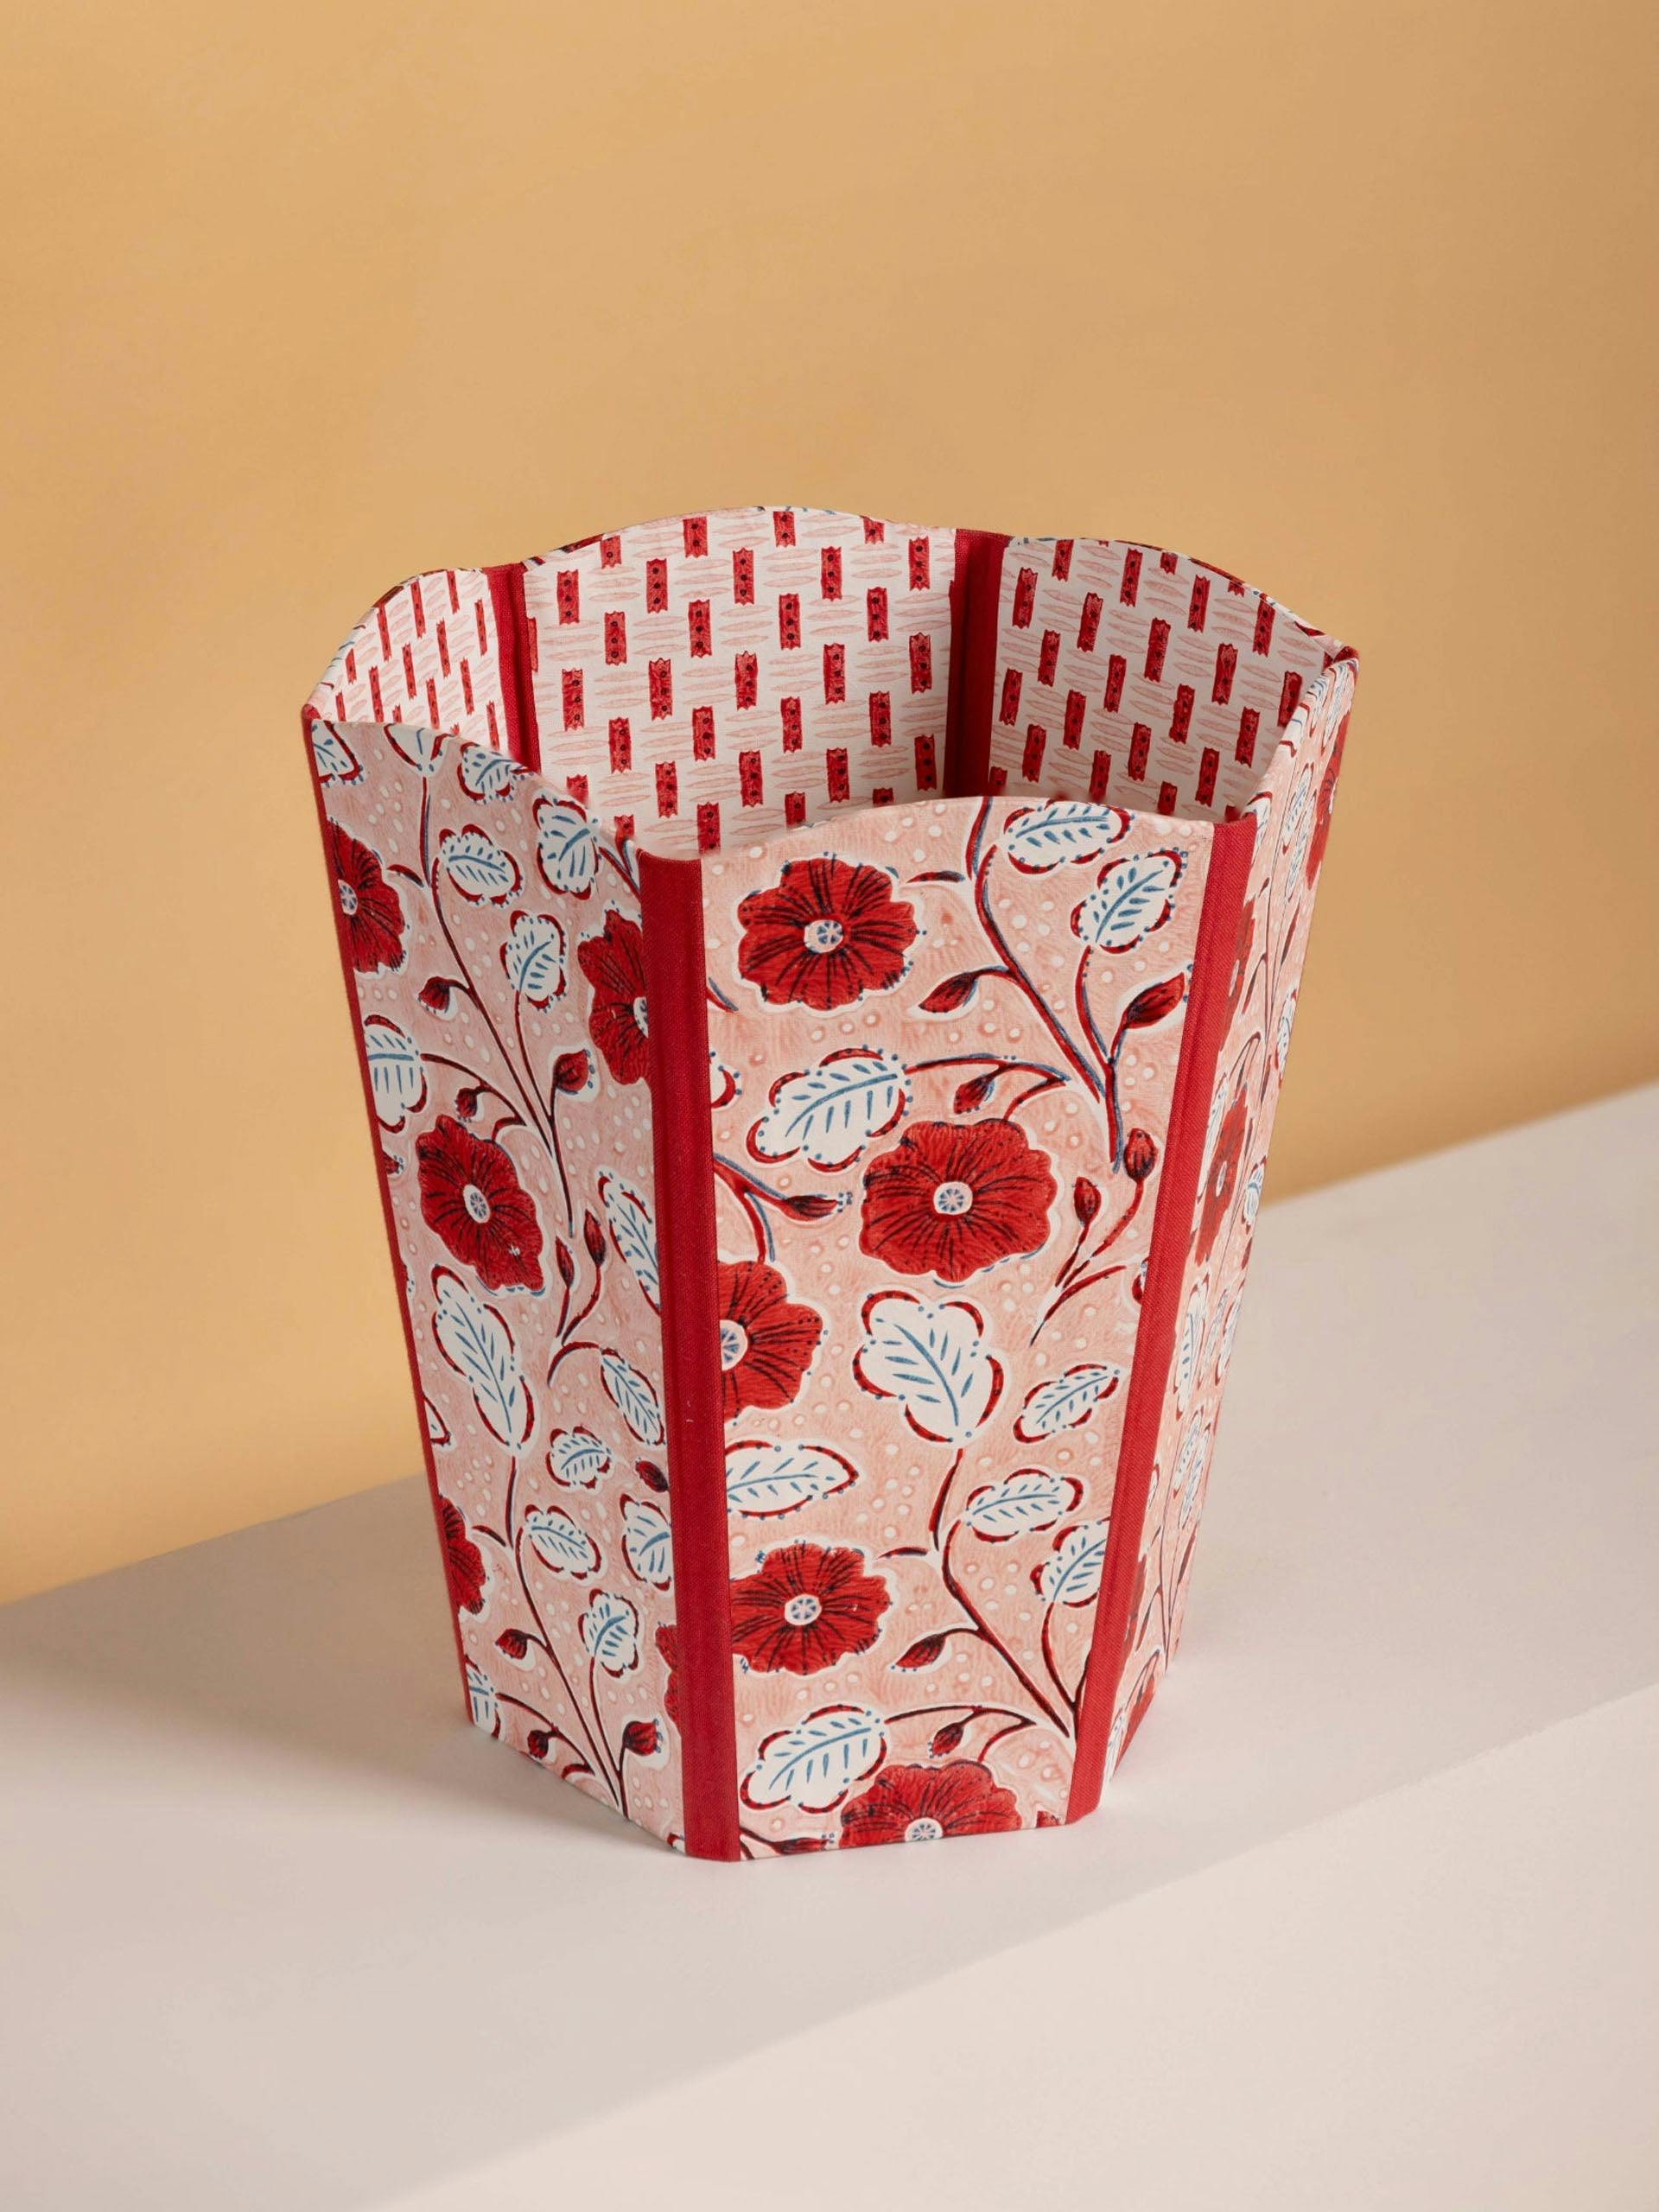 Red poppy wastepaper bin